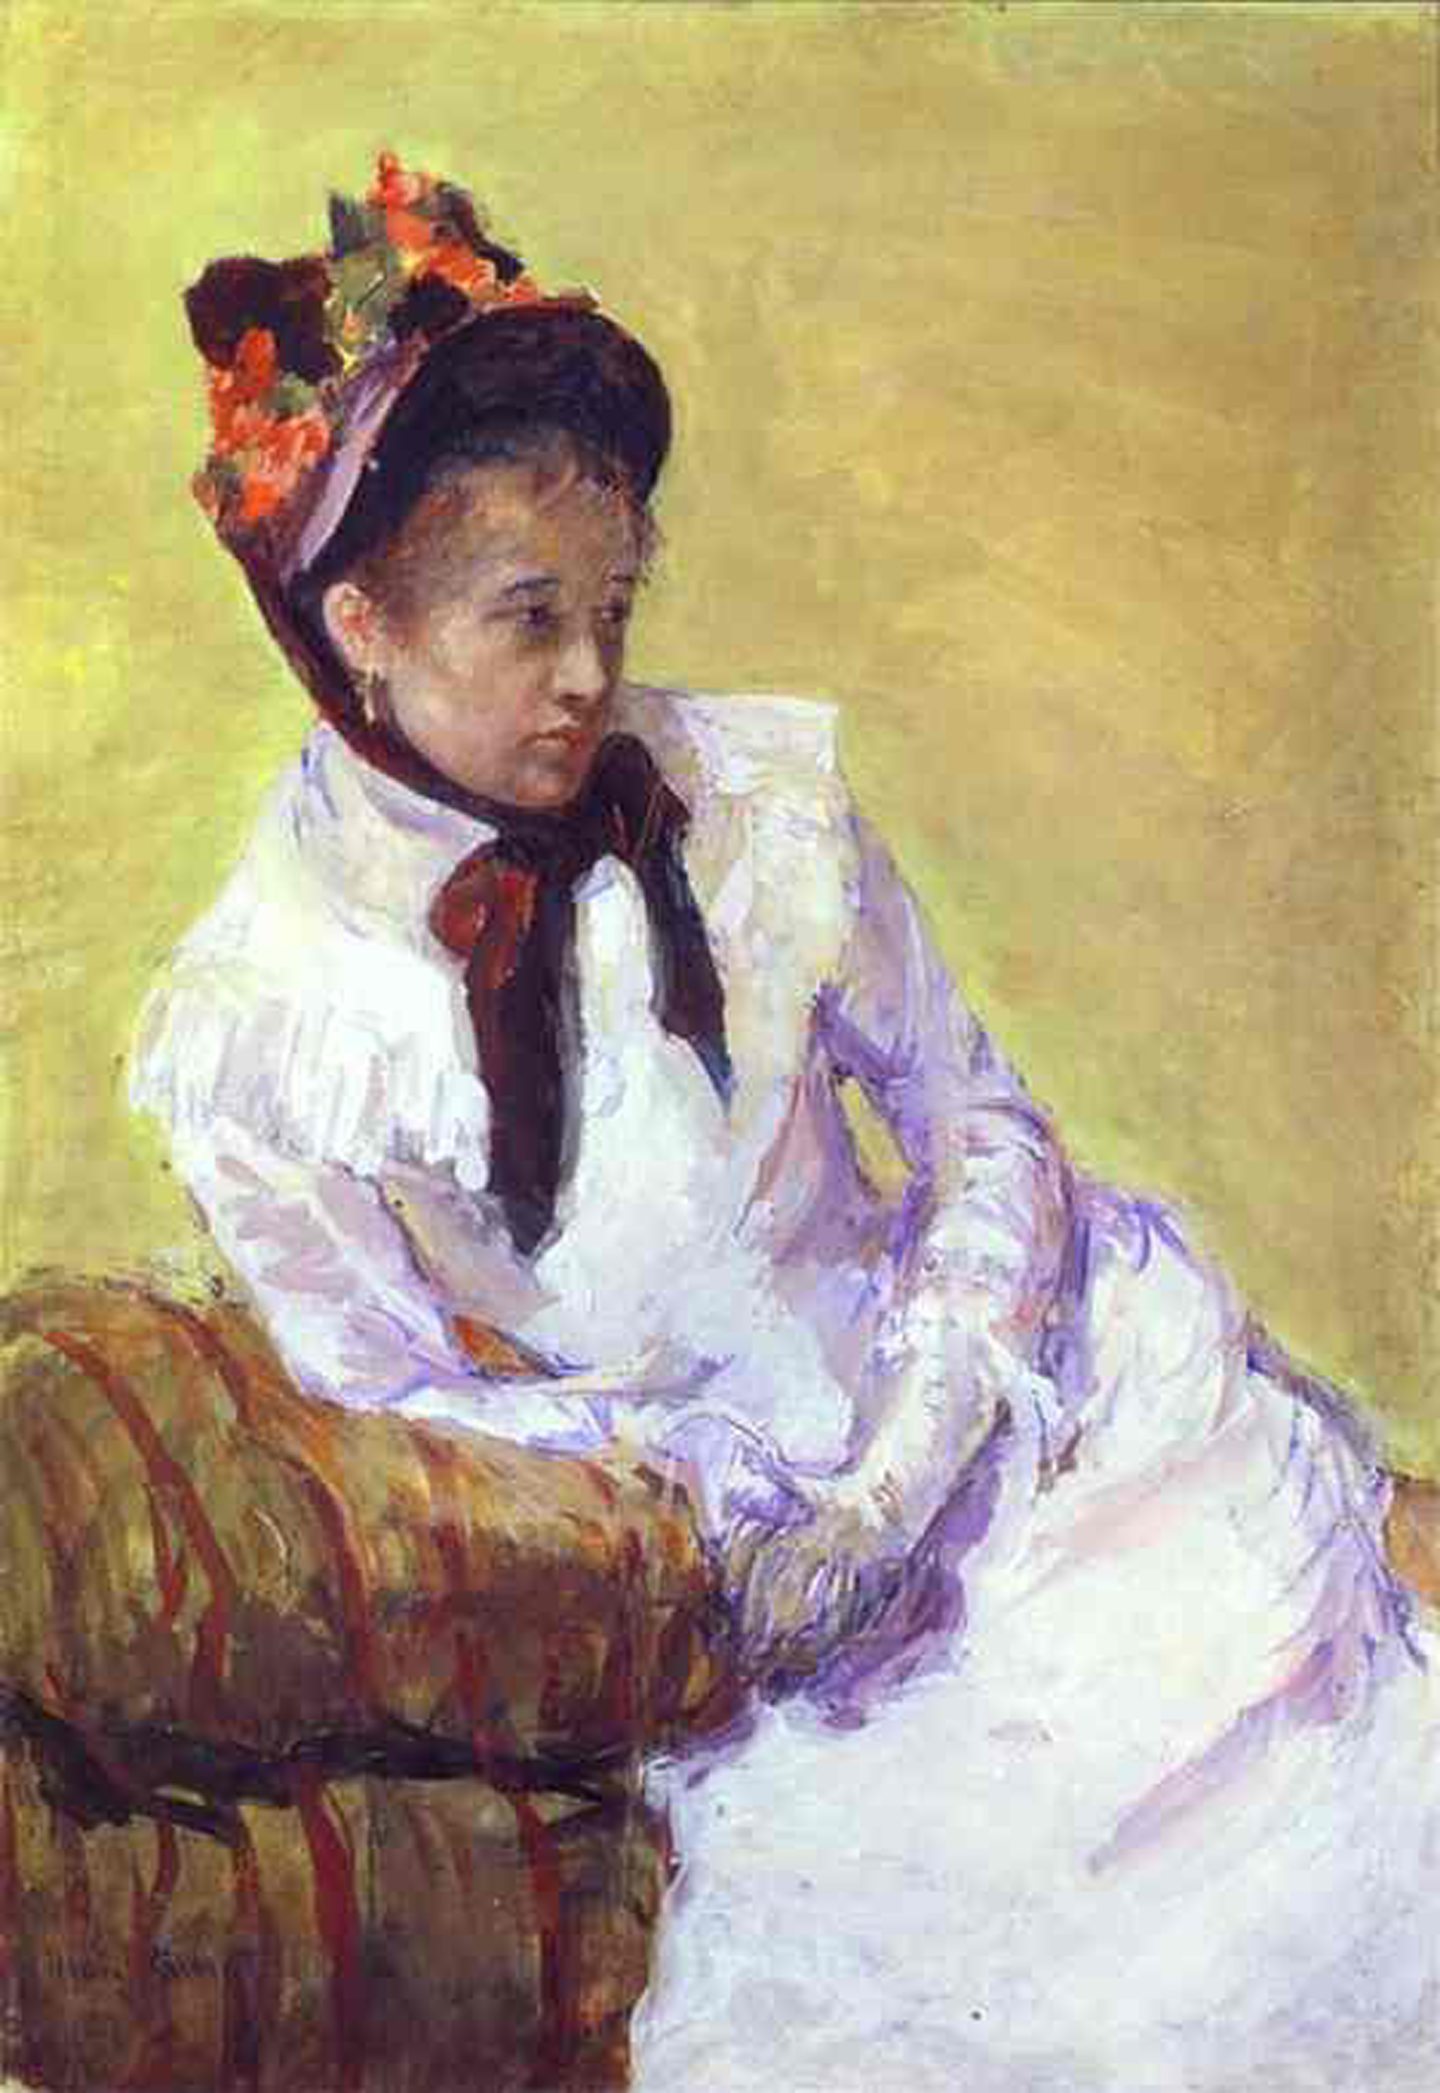 Mary Cassatt, an important Impressionist